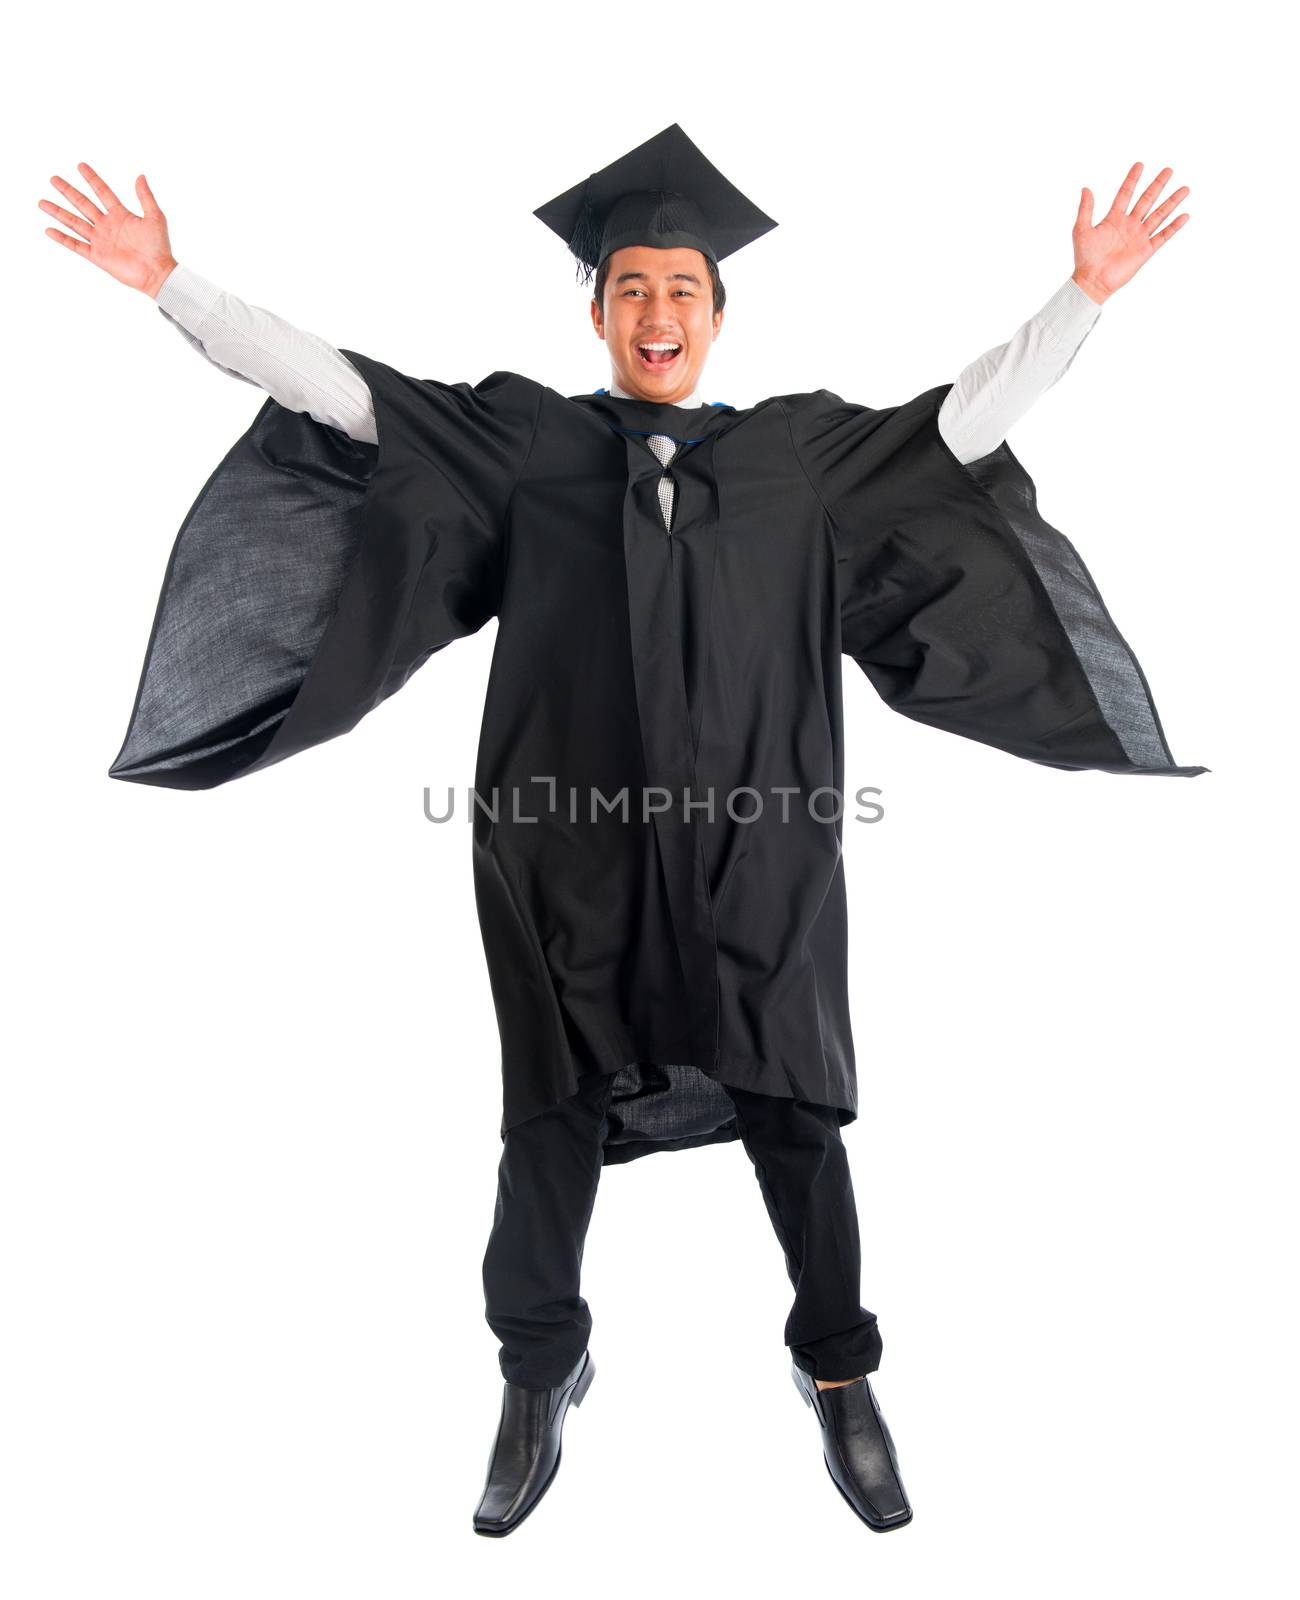 Graduate university student jumping high by szefei